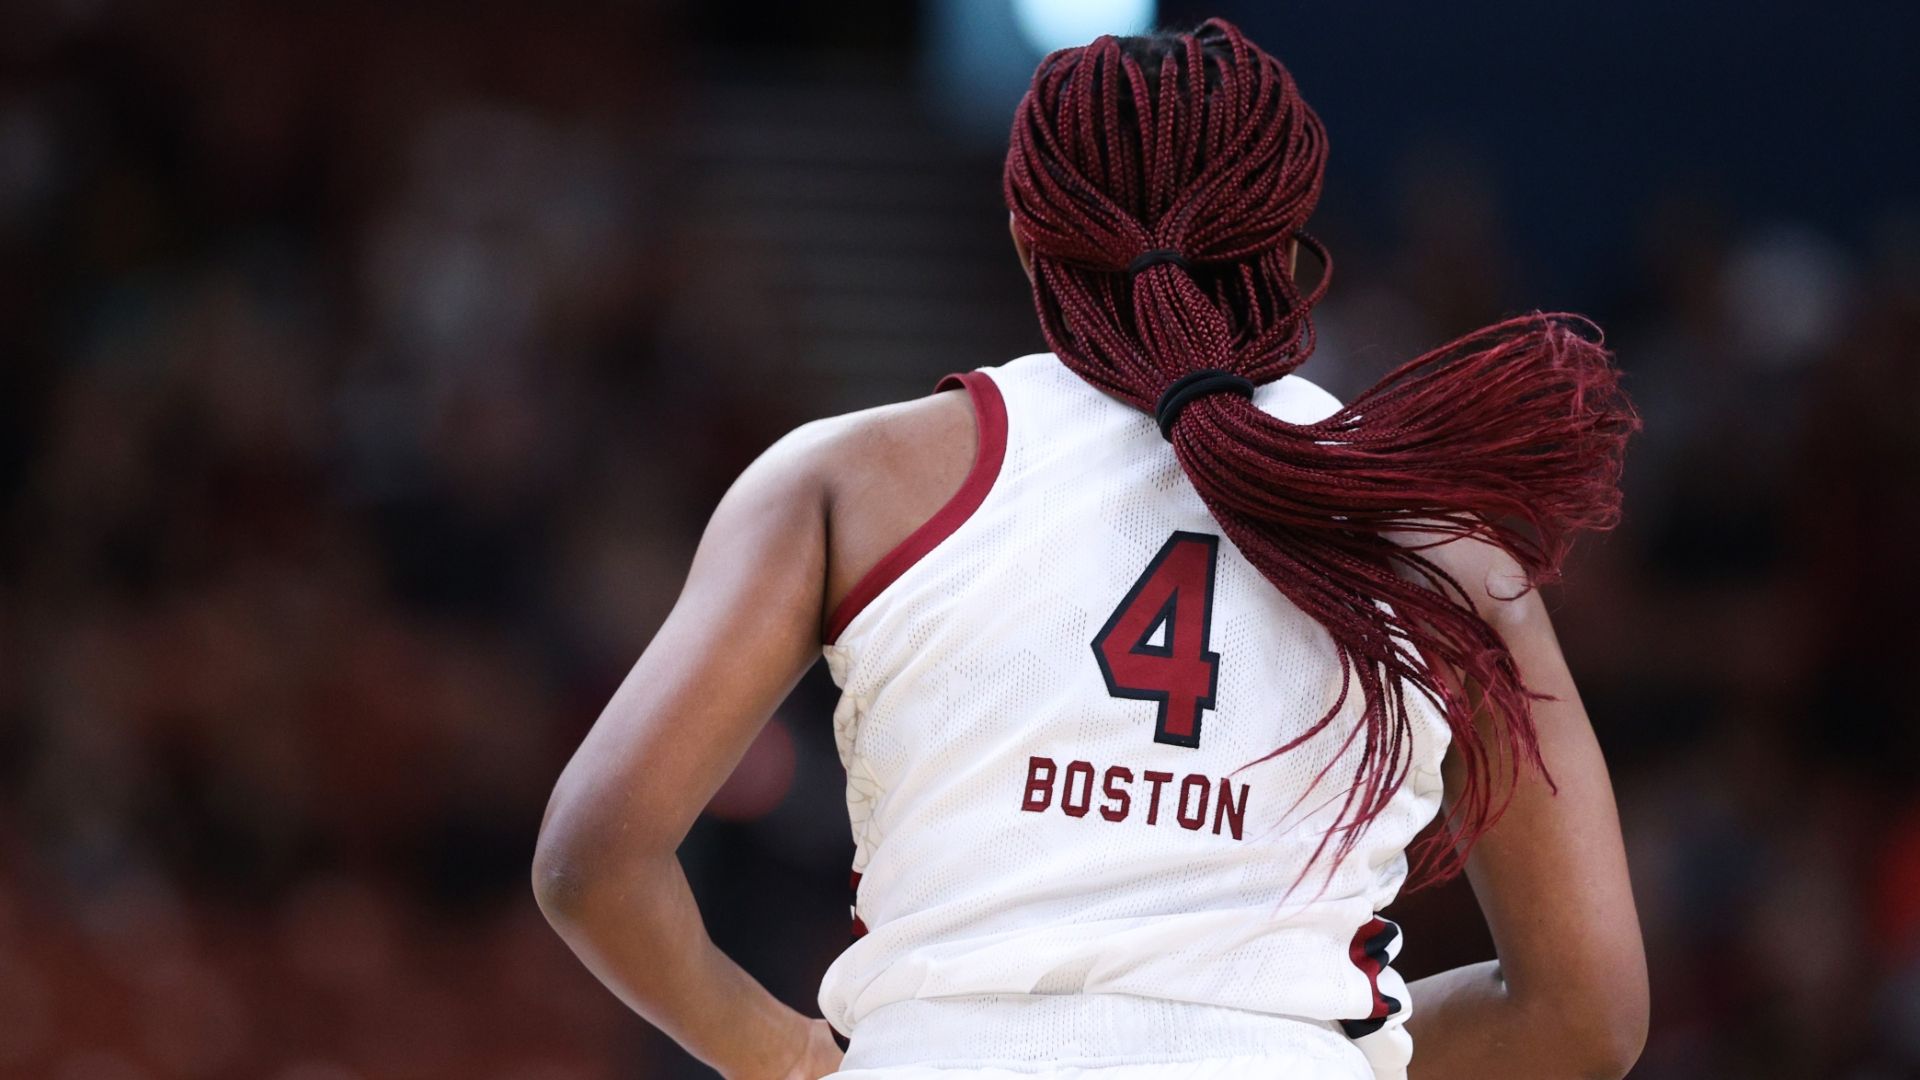 South Carolina's Boston declares for the WNBA Draft